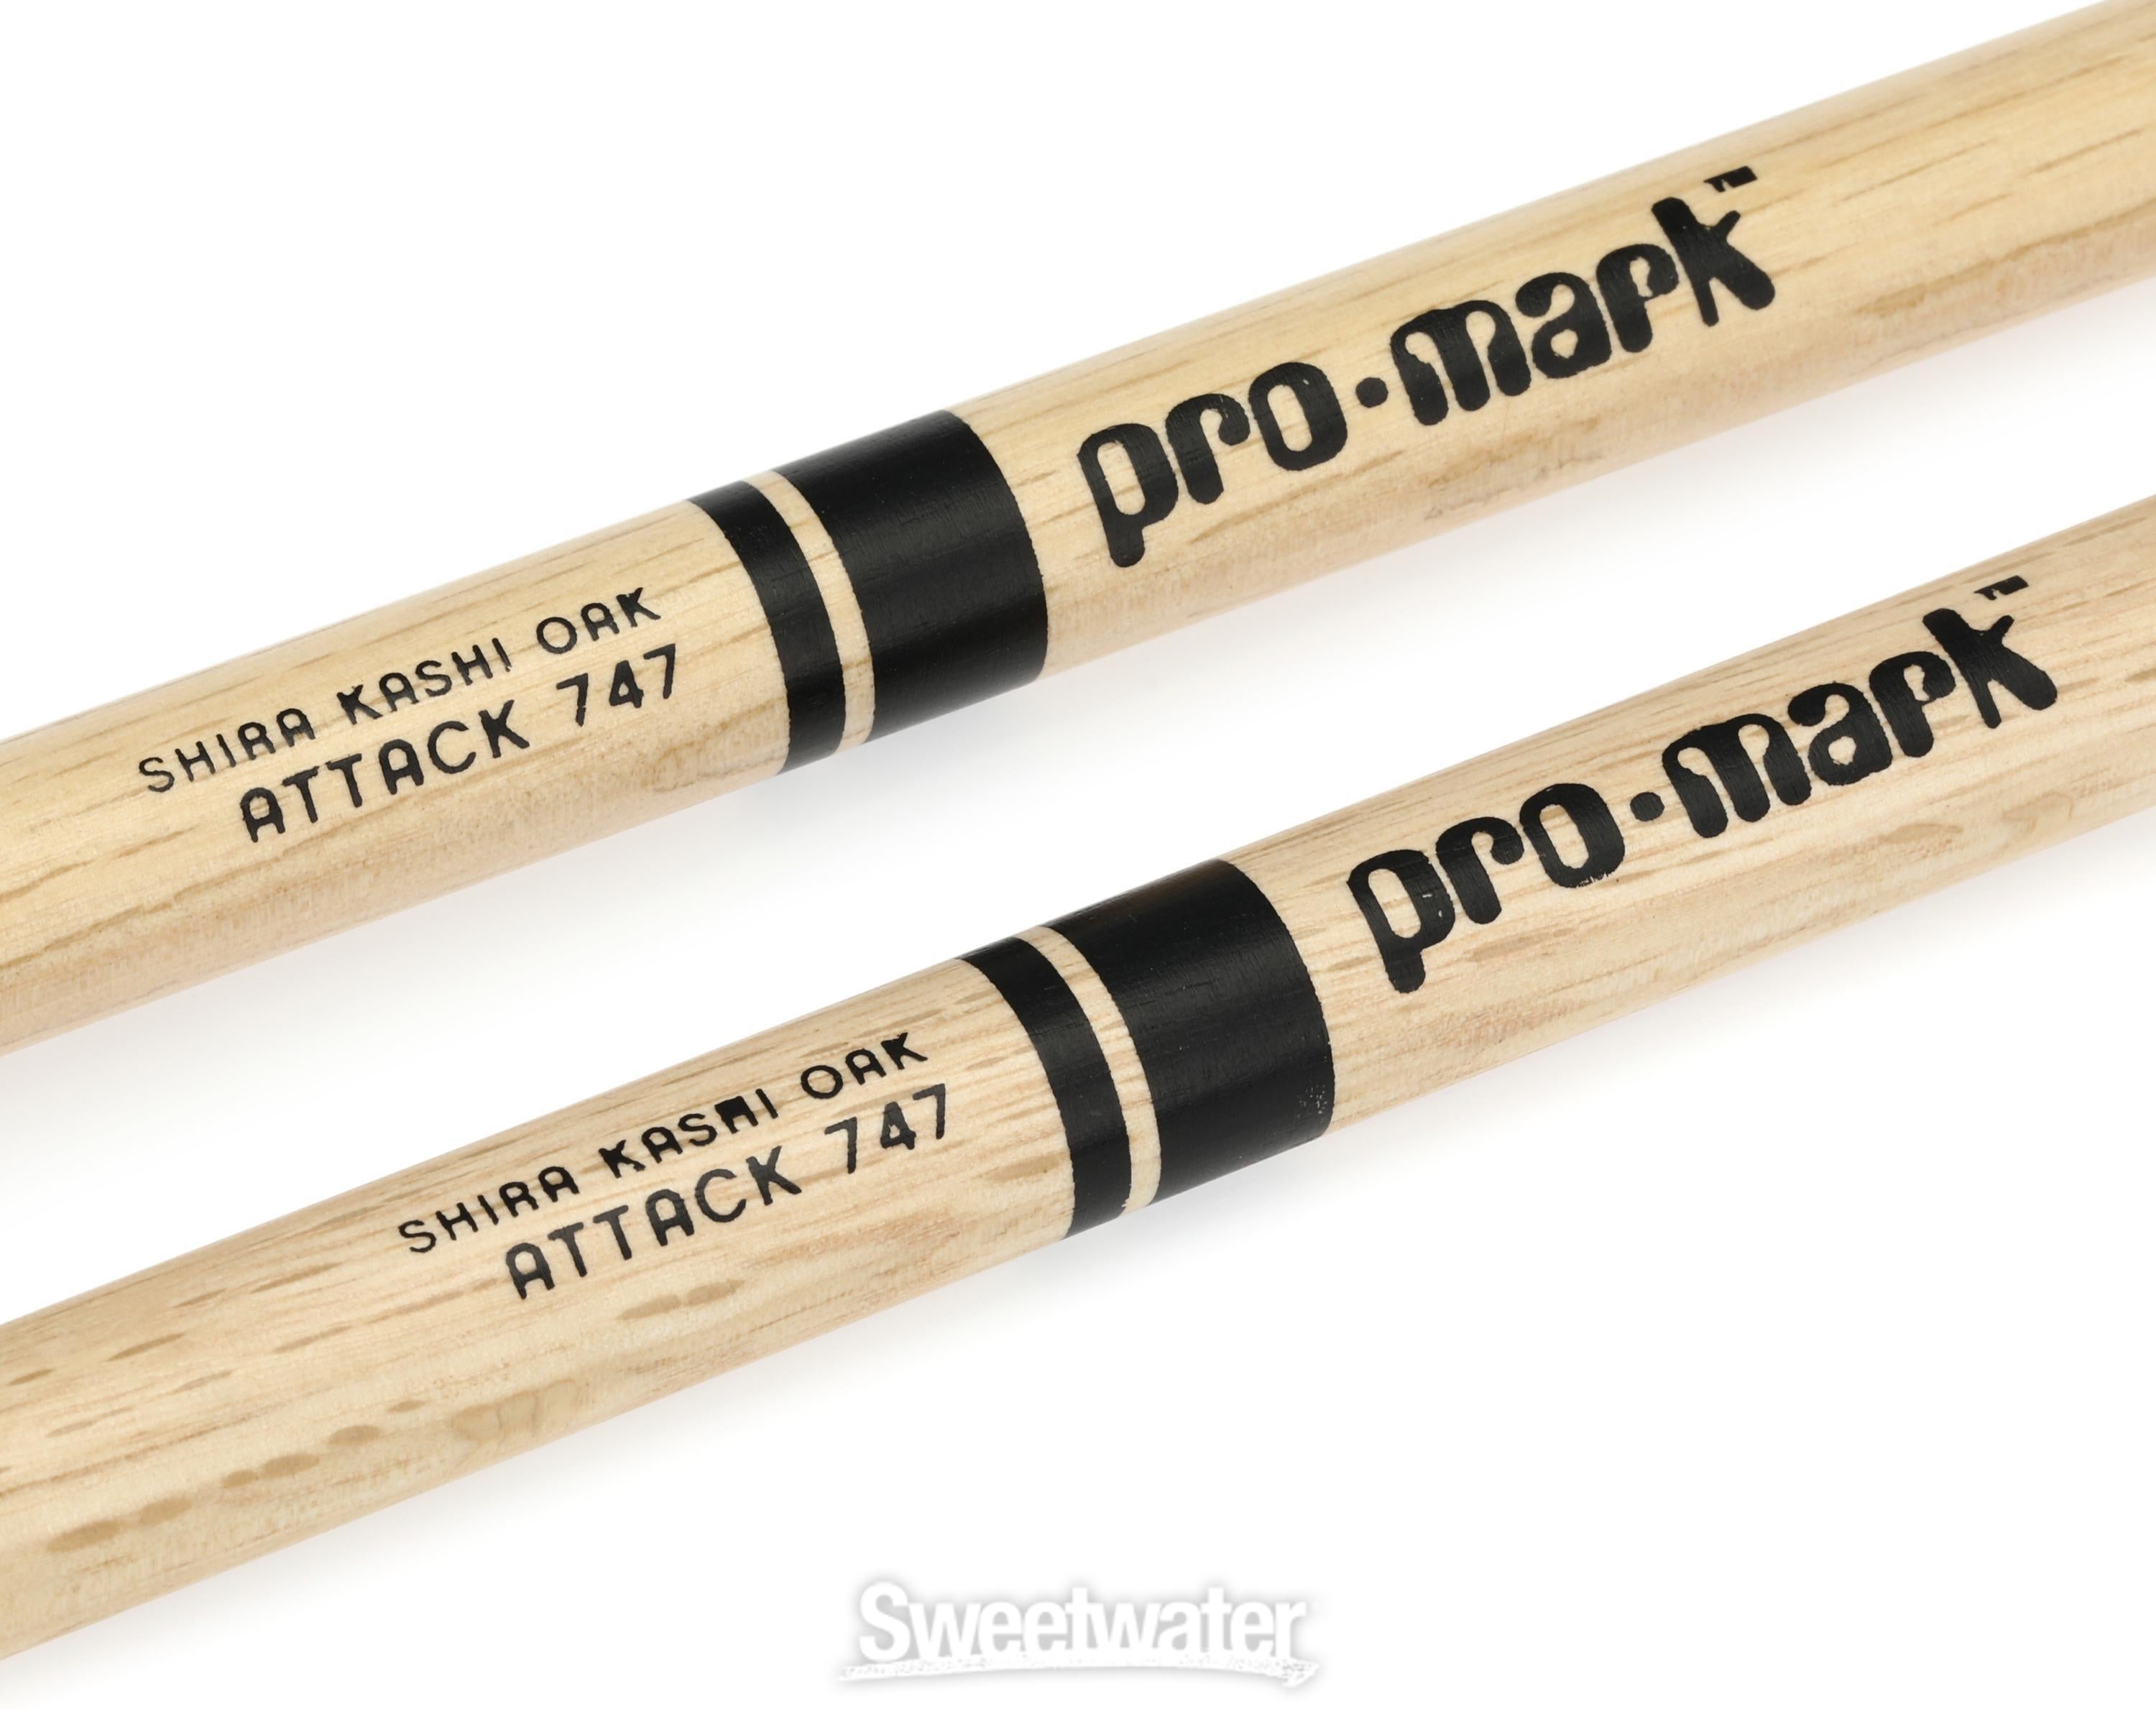 Promark Classic Attack Drumsticks - Shira Kashi Oak 747 - Nylon